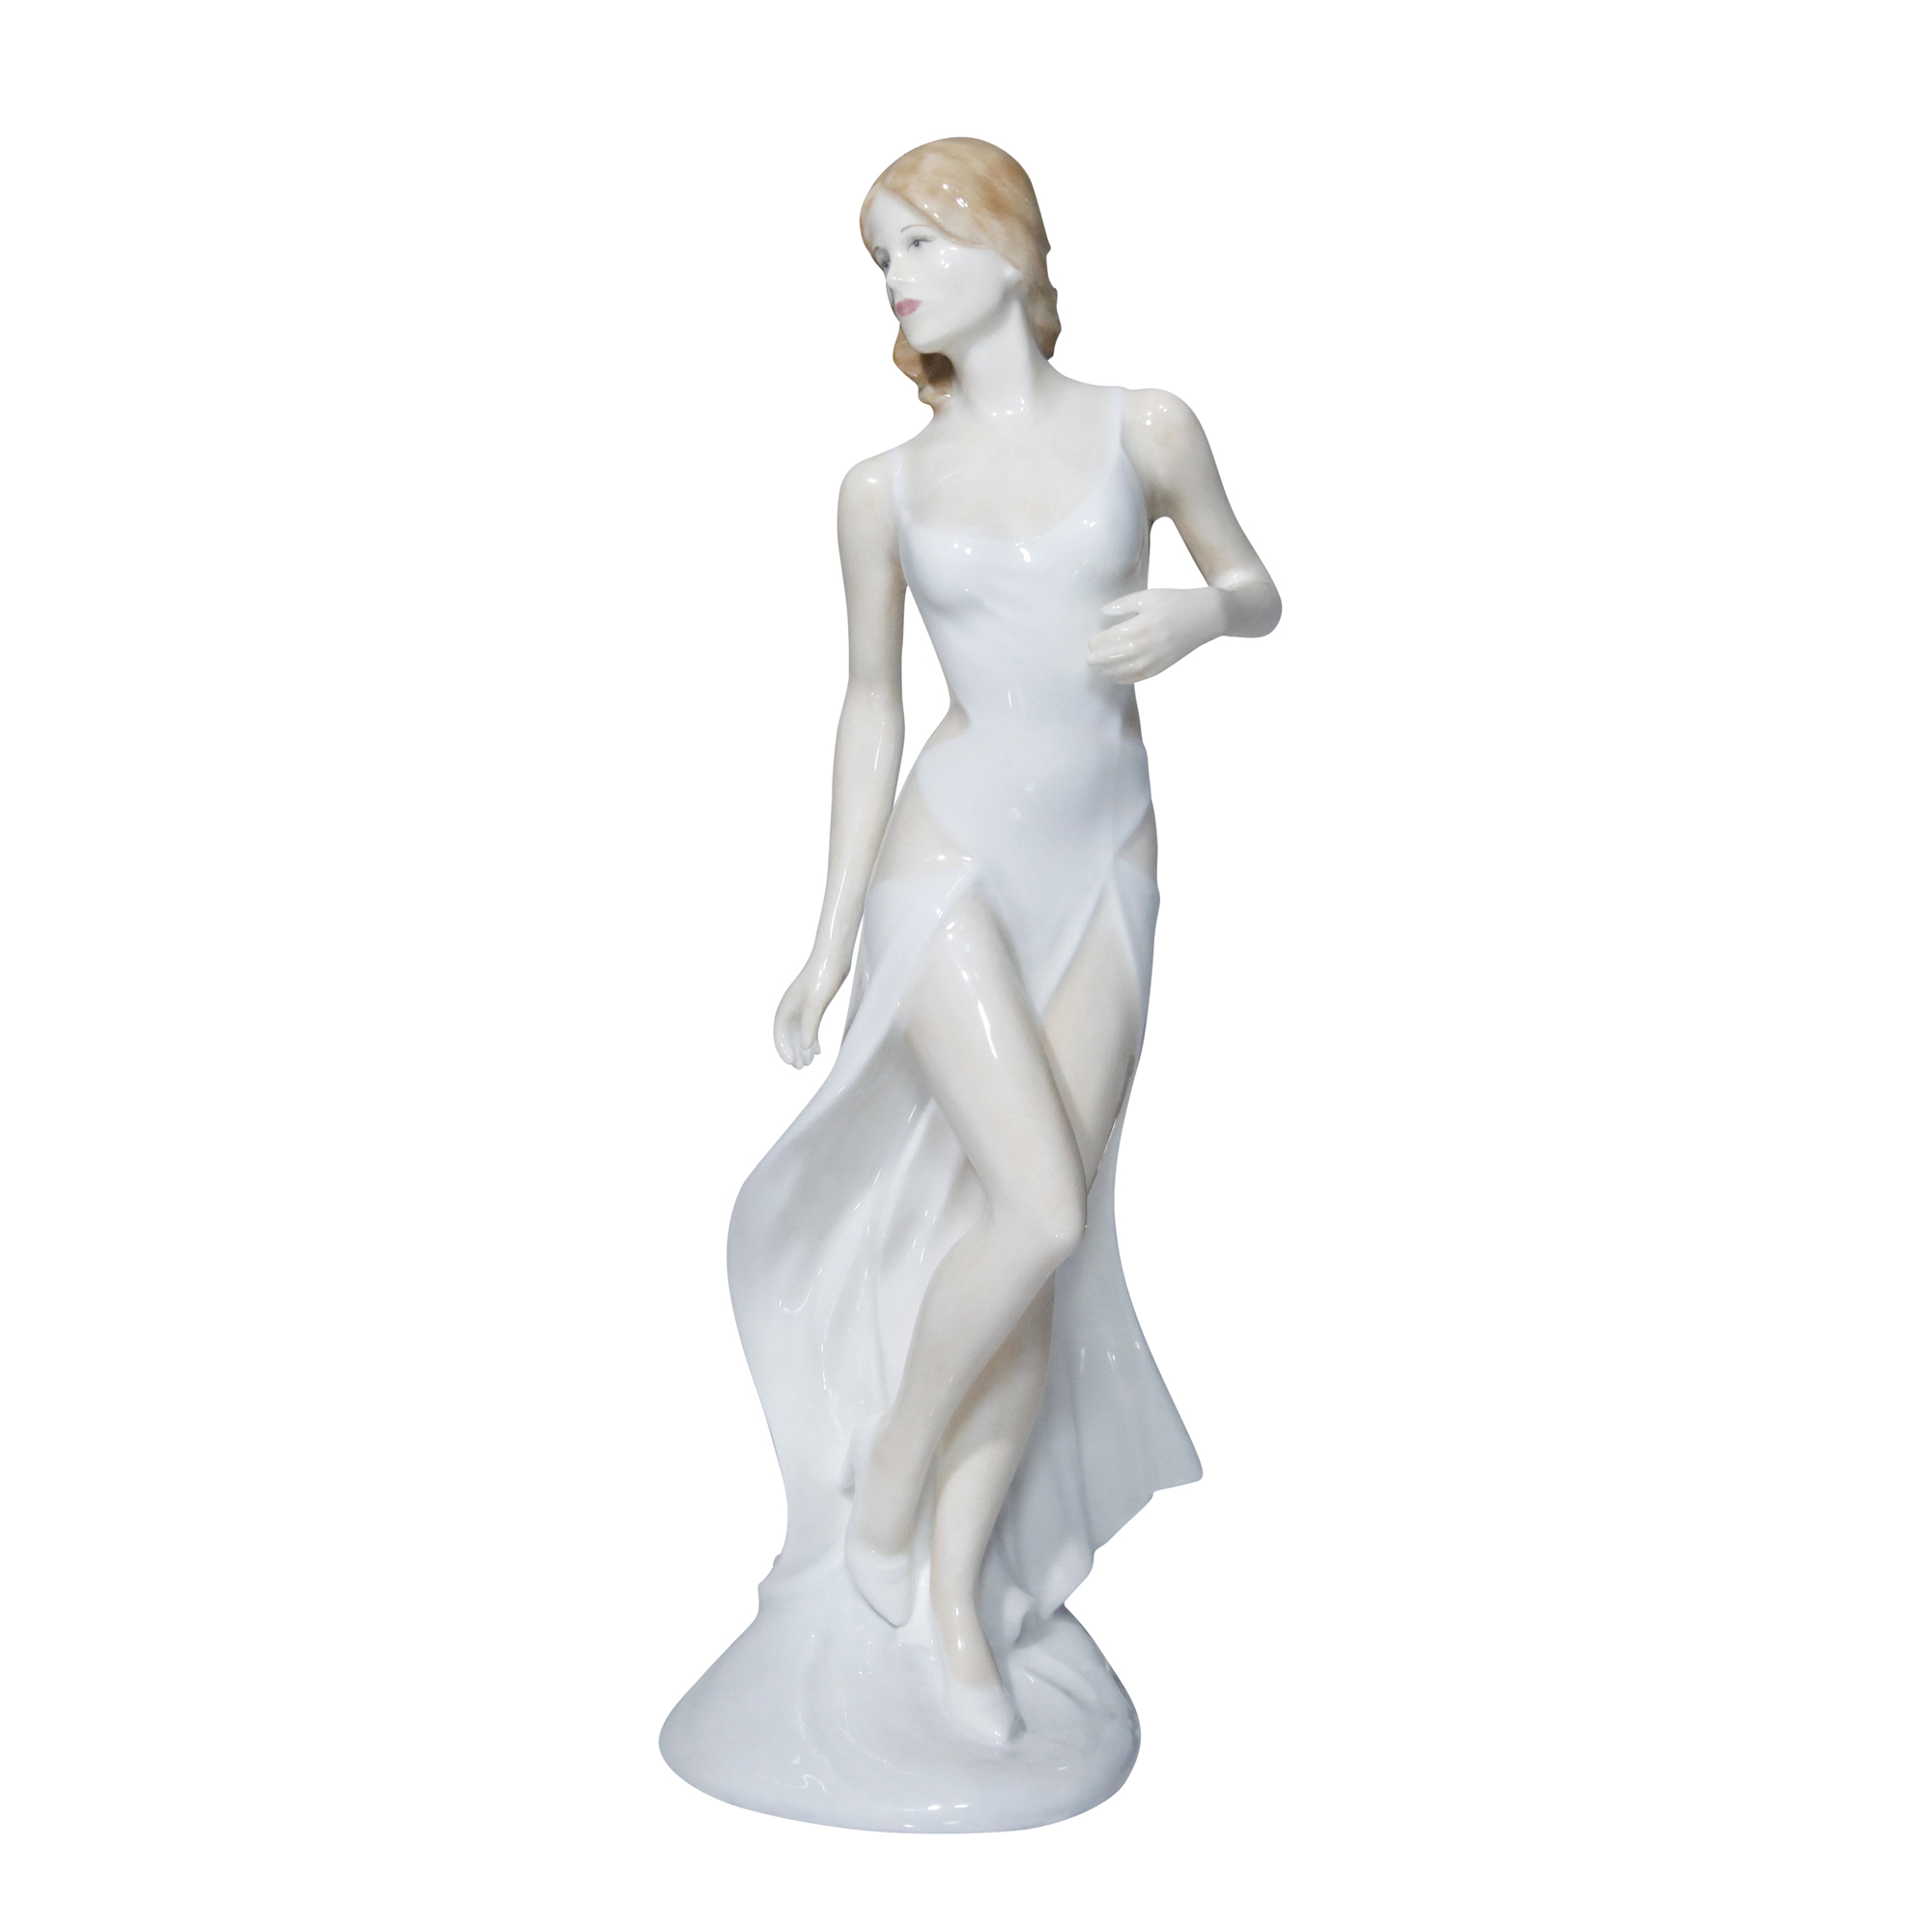 Francesca HN4534 Royal Doulton Figurine